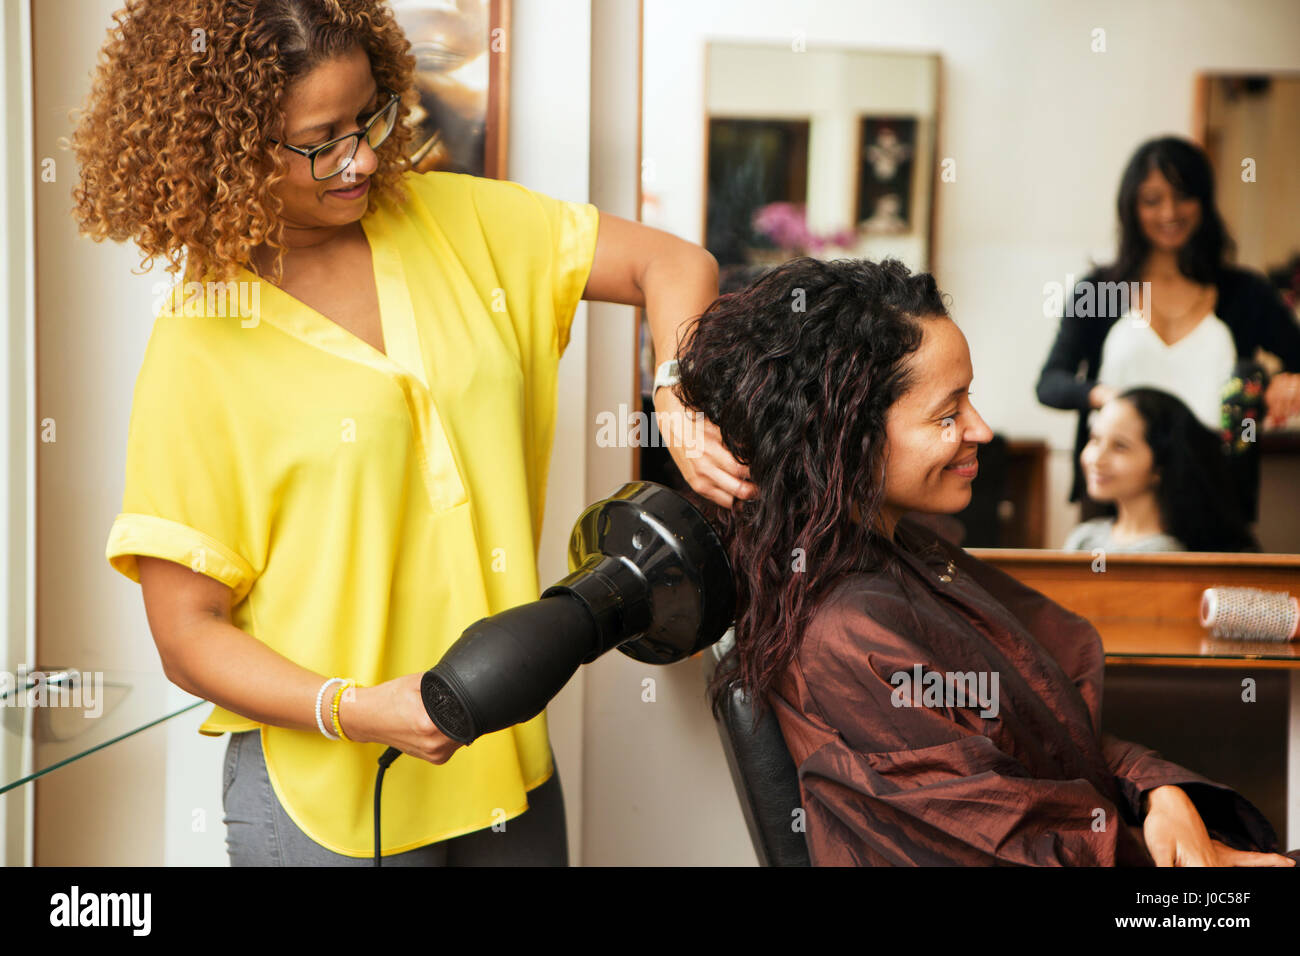 Hairdresser blow drying female customer's hair in hair salon Stock Photo